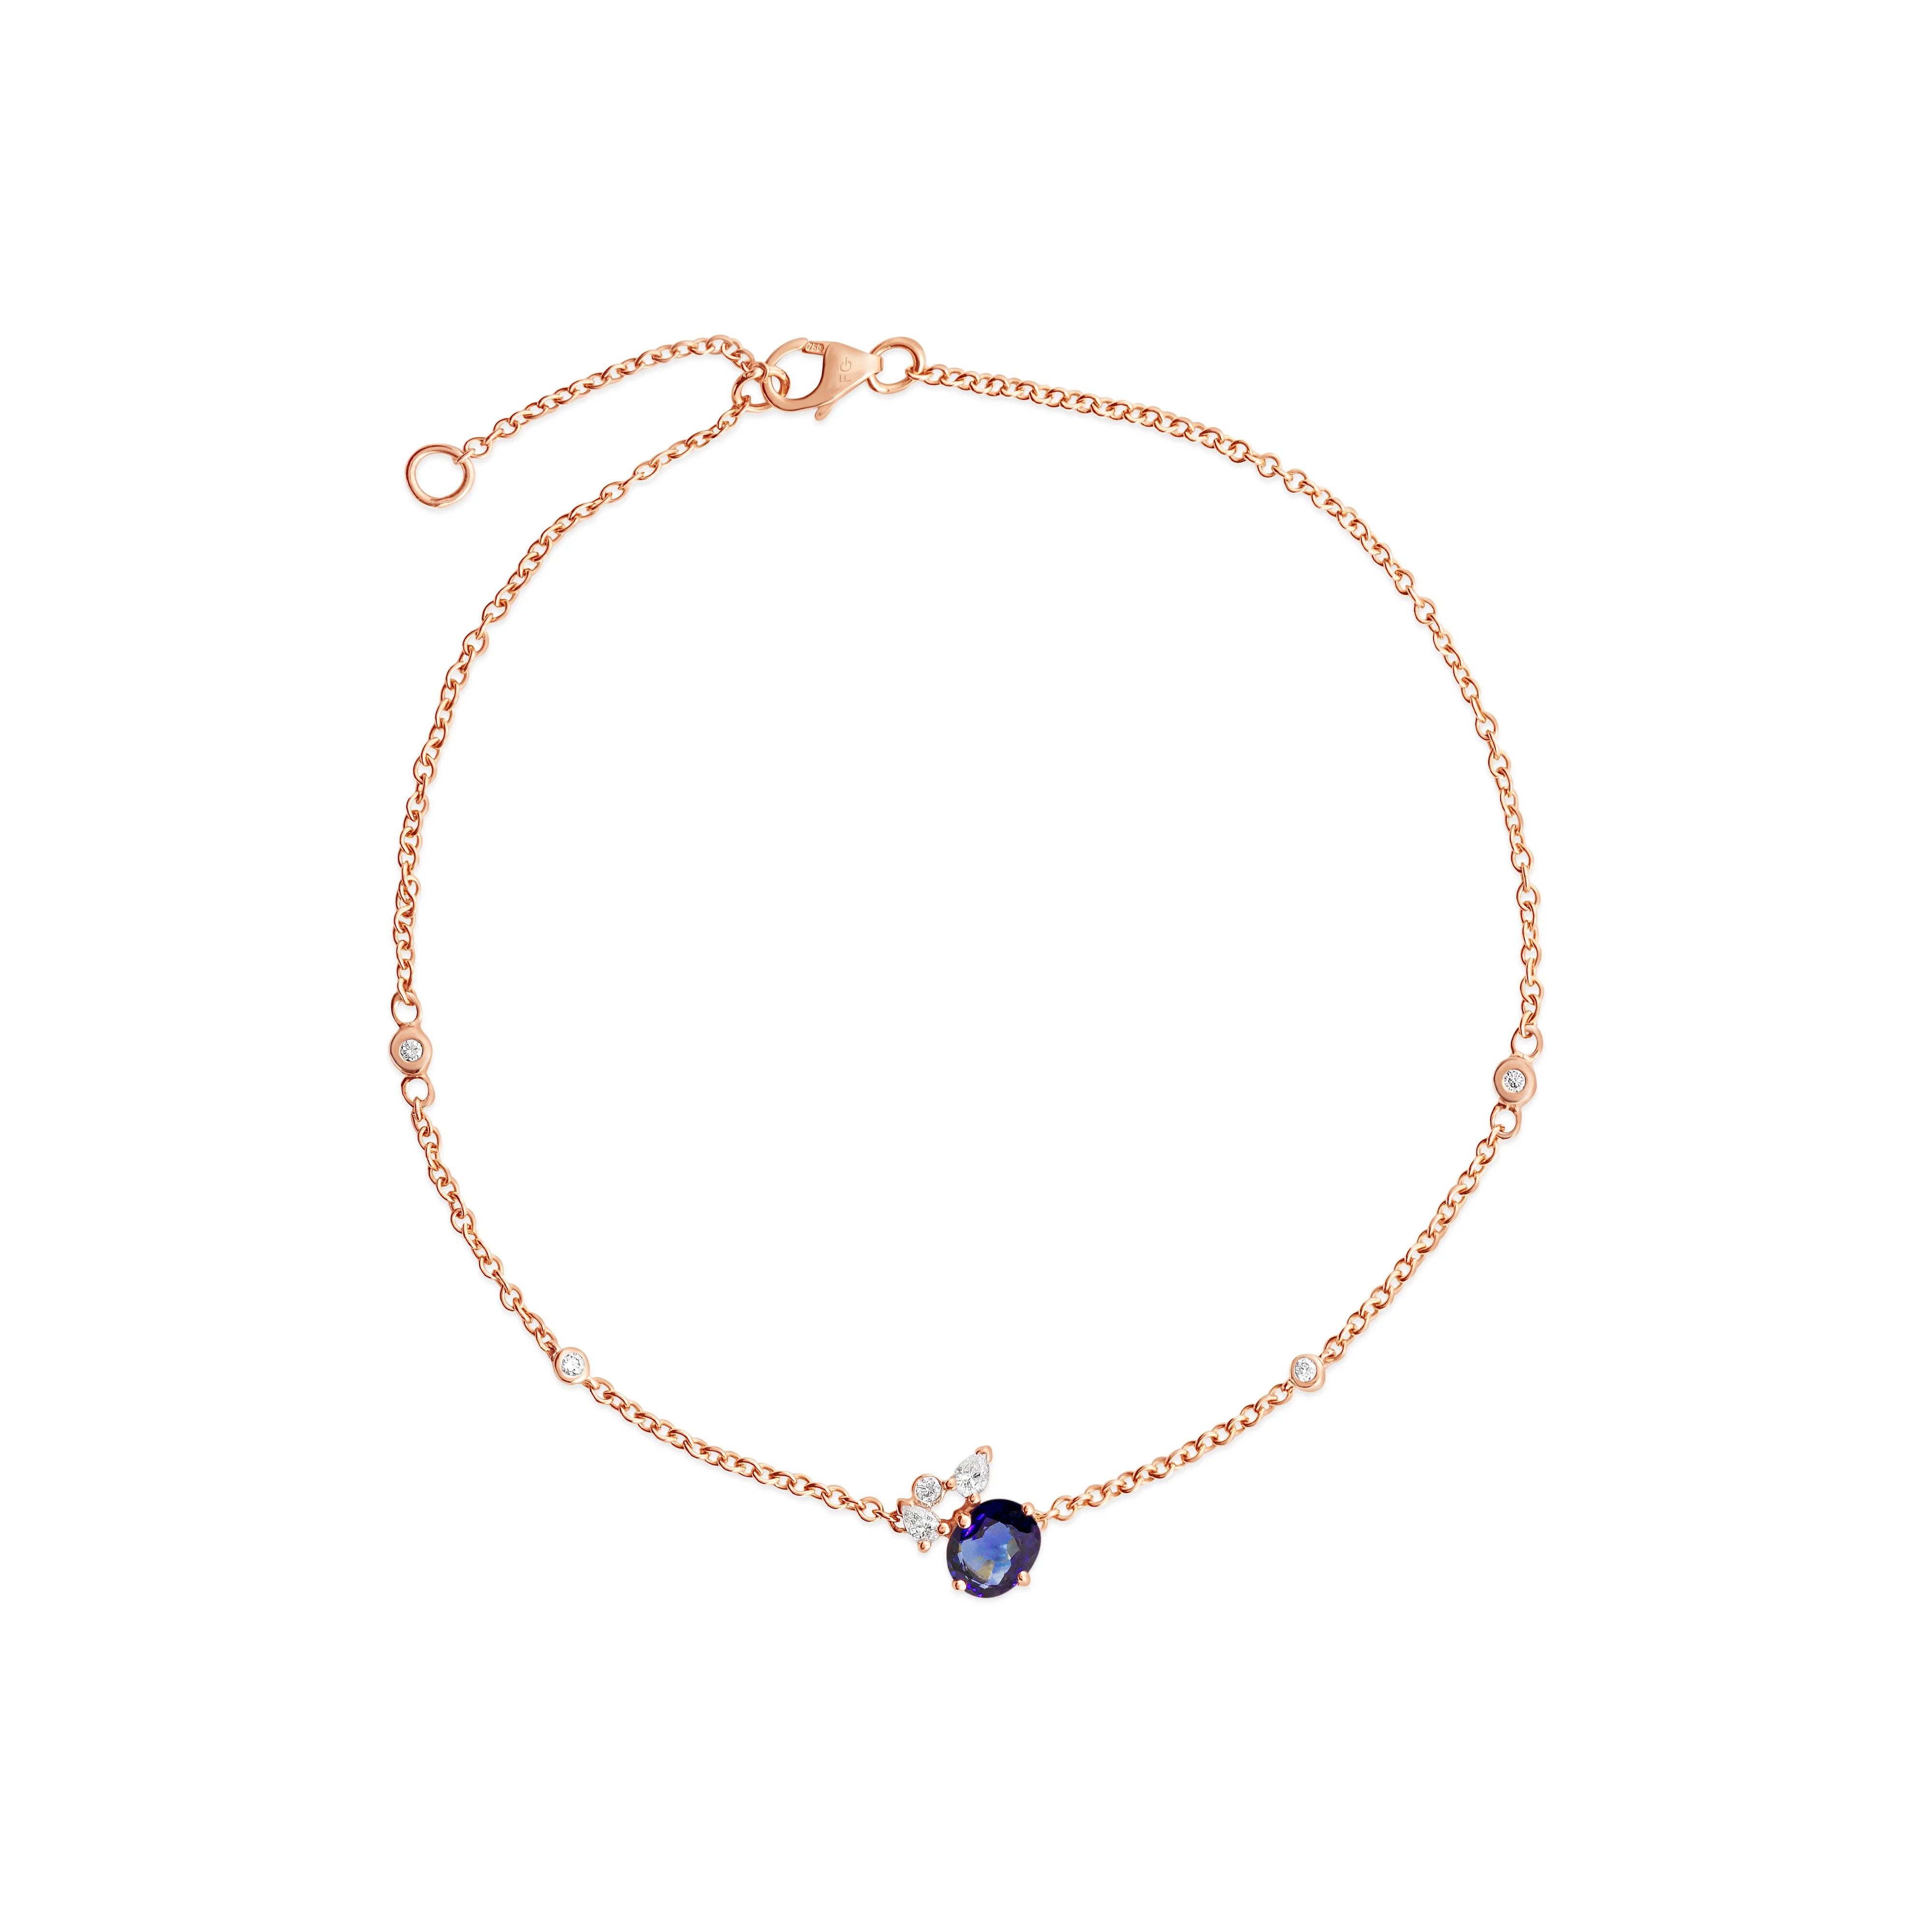 Bracelet en Or 18 Carat avec Saphir Bleu et Diamants - Moribana - Politains